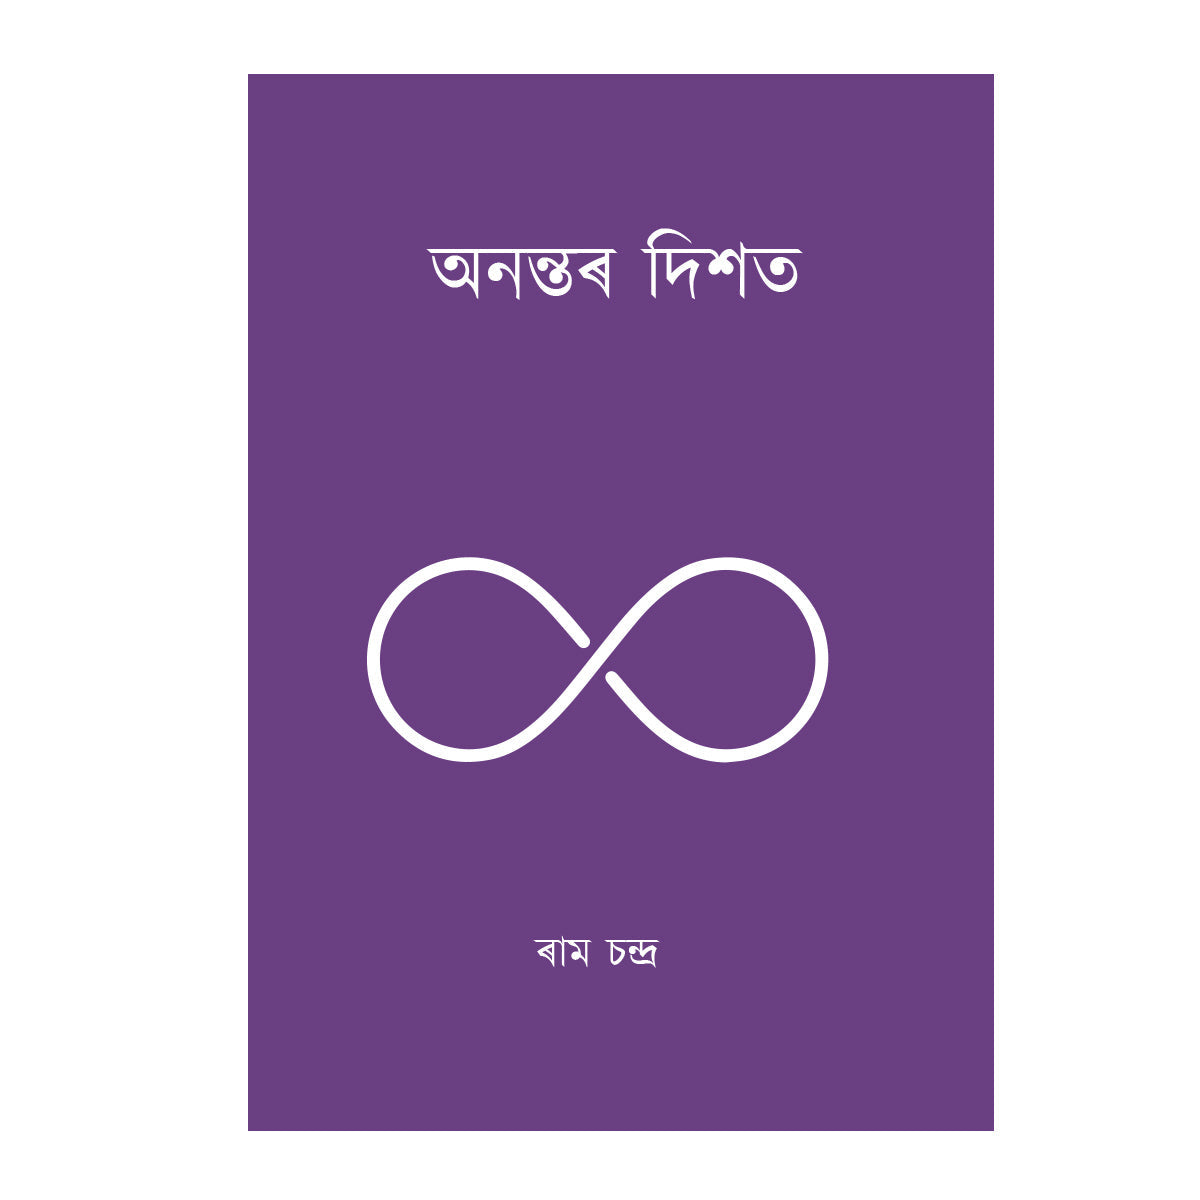 Toward Infinity( Assamese)